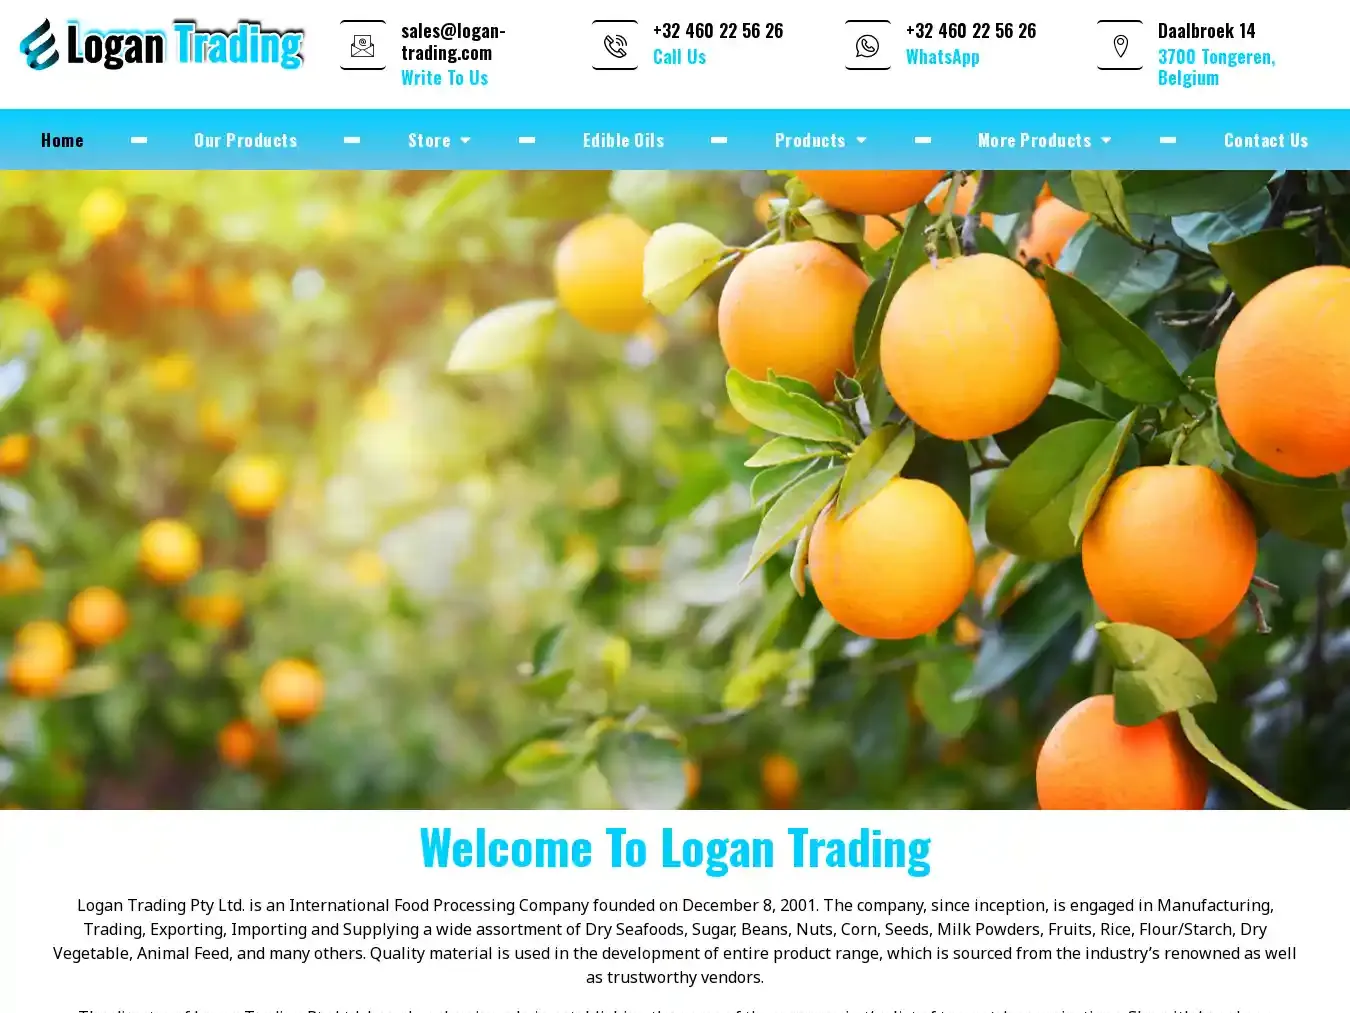 Logan-trading.com Fraudulent Non-Delivery website.